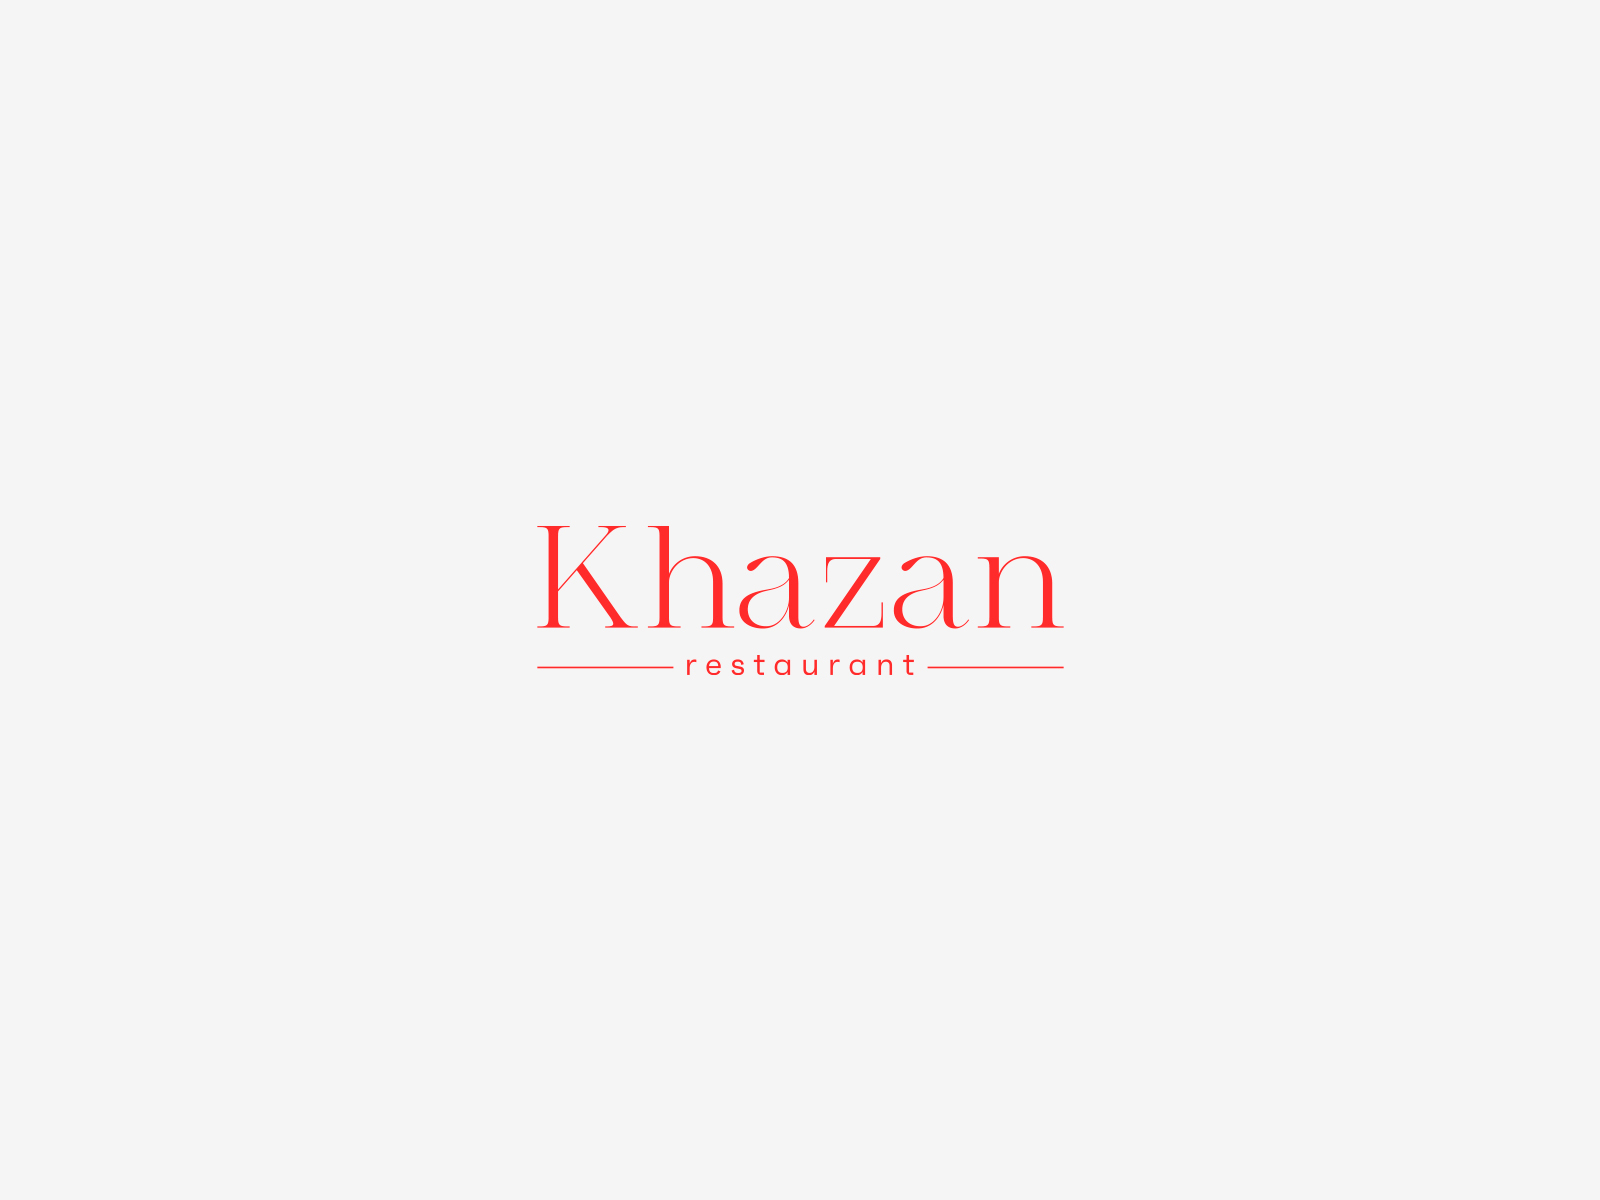 Khazan Restaurant Logo by Javanshir on Dribbble